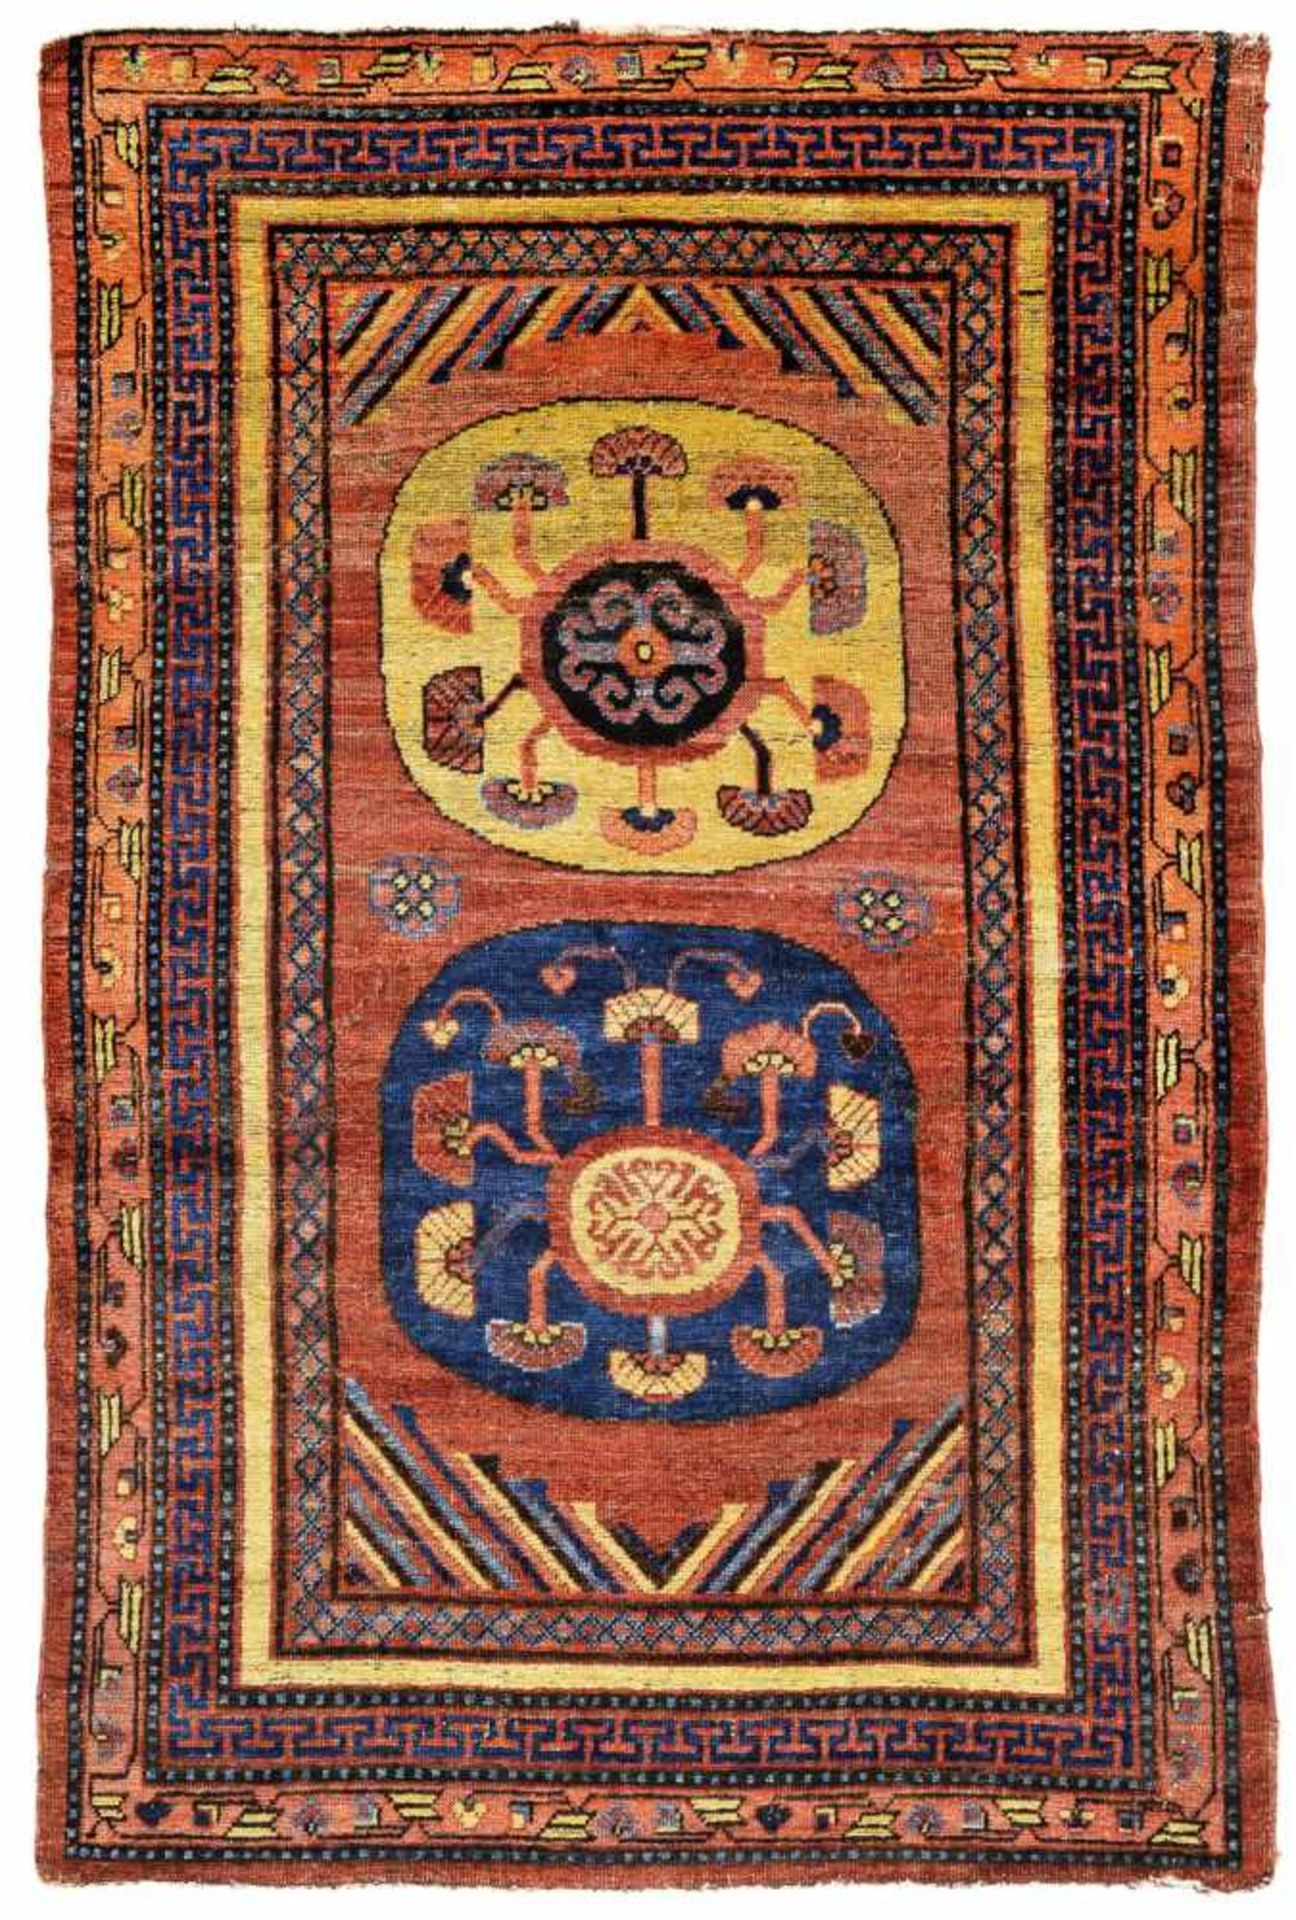 An antique Khotan rug, Eastern Turkestan, 1st half 19th ct. - Reweavings, minor damages, incomplete,